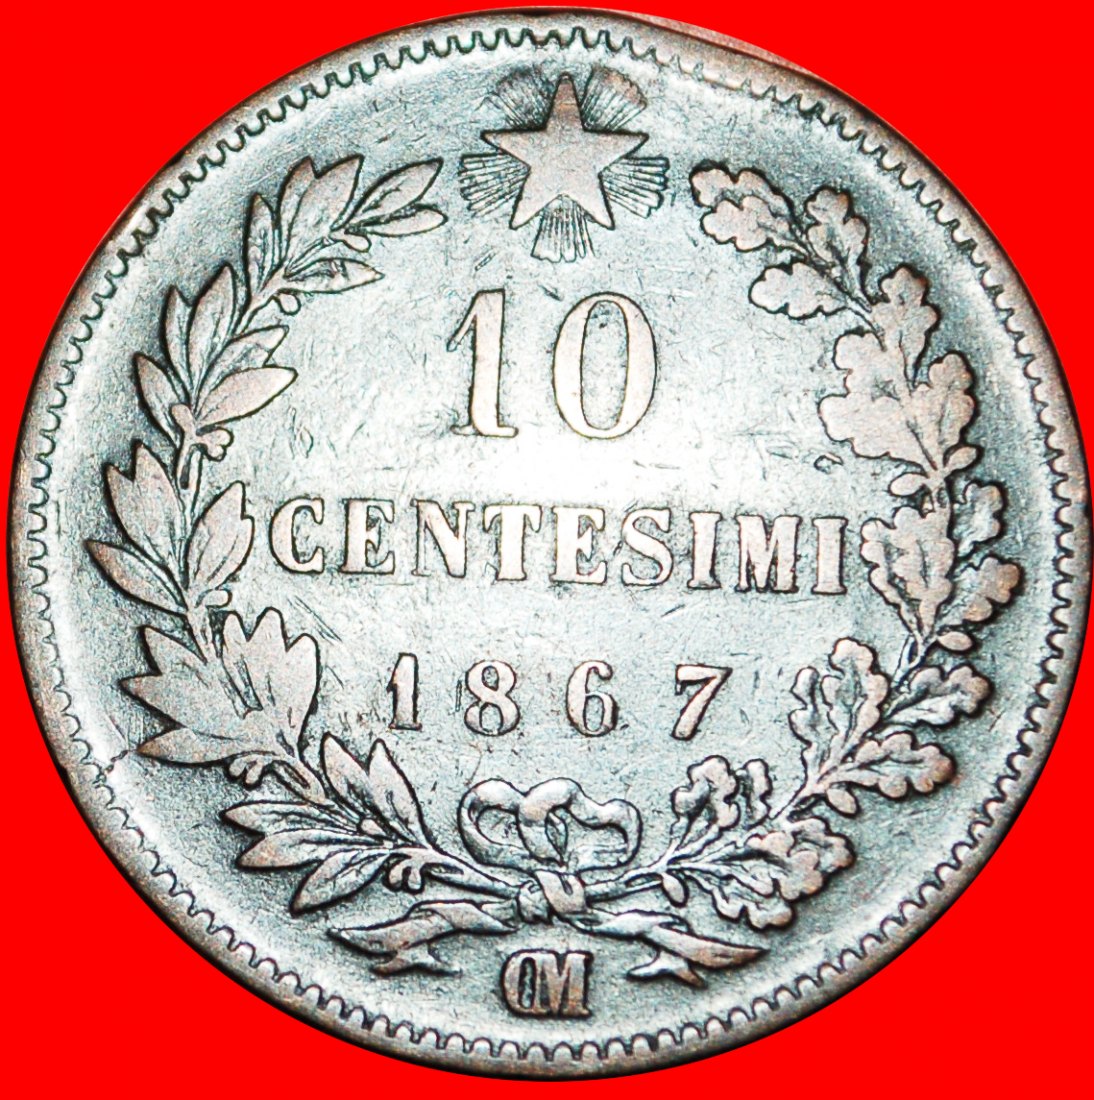  * FRANCE: ITALY ★ 10 CENTESIMES 1867OM! VICTOR EMMANUEL II (1861-1878) LOW START ★ NO RESERVE!   